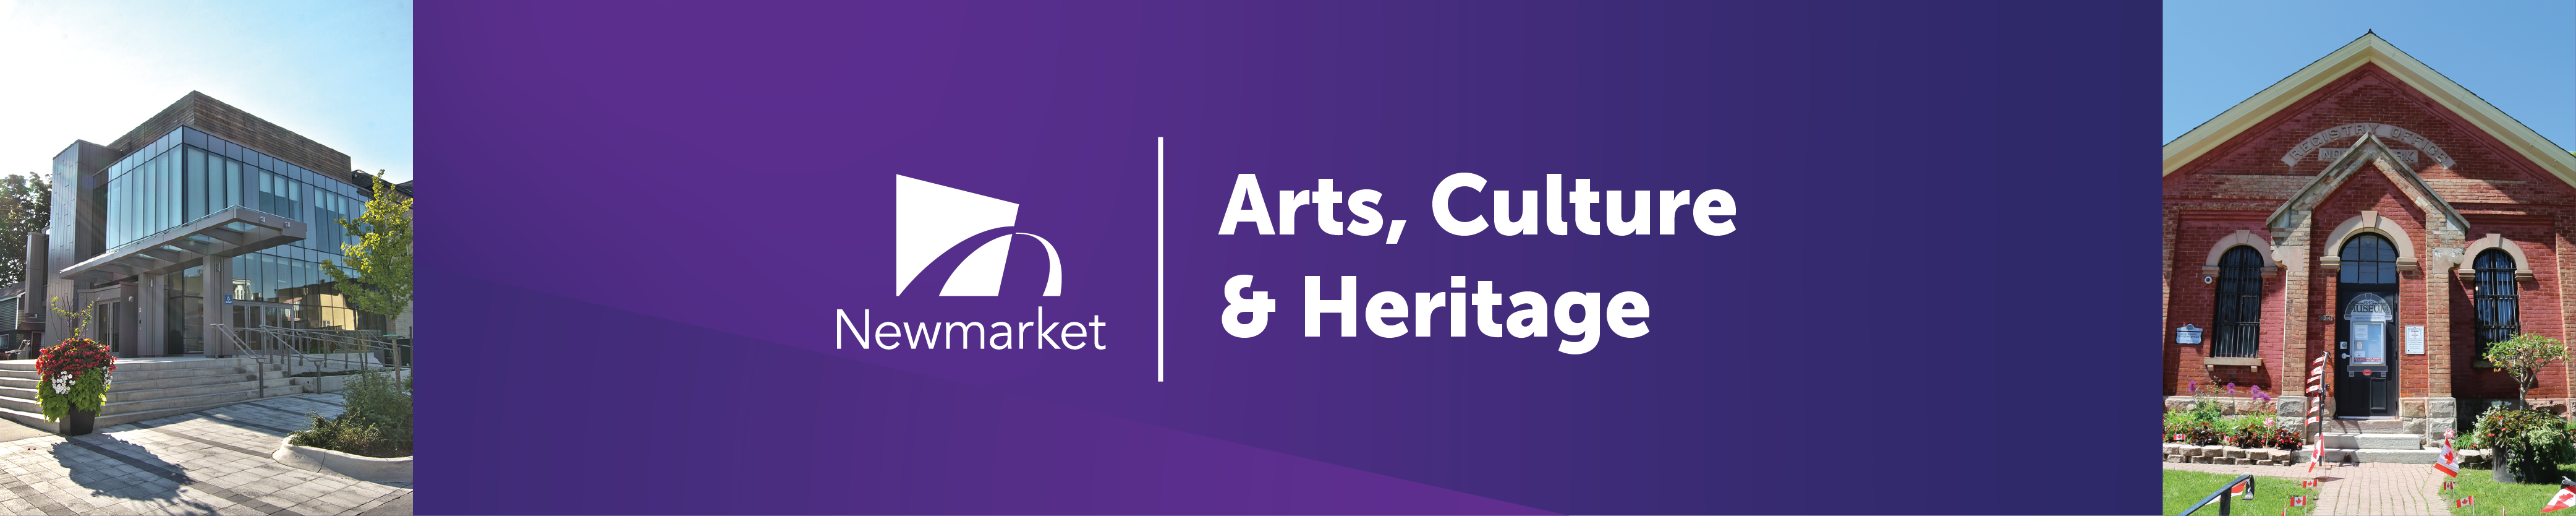 arts, culture & heritage banner